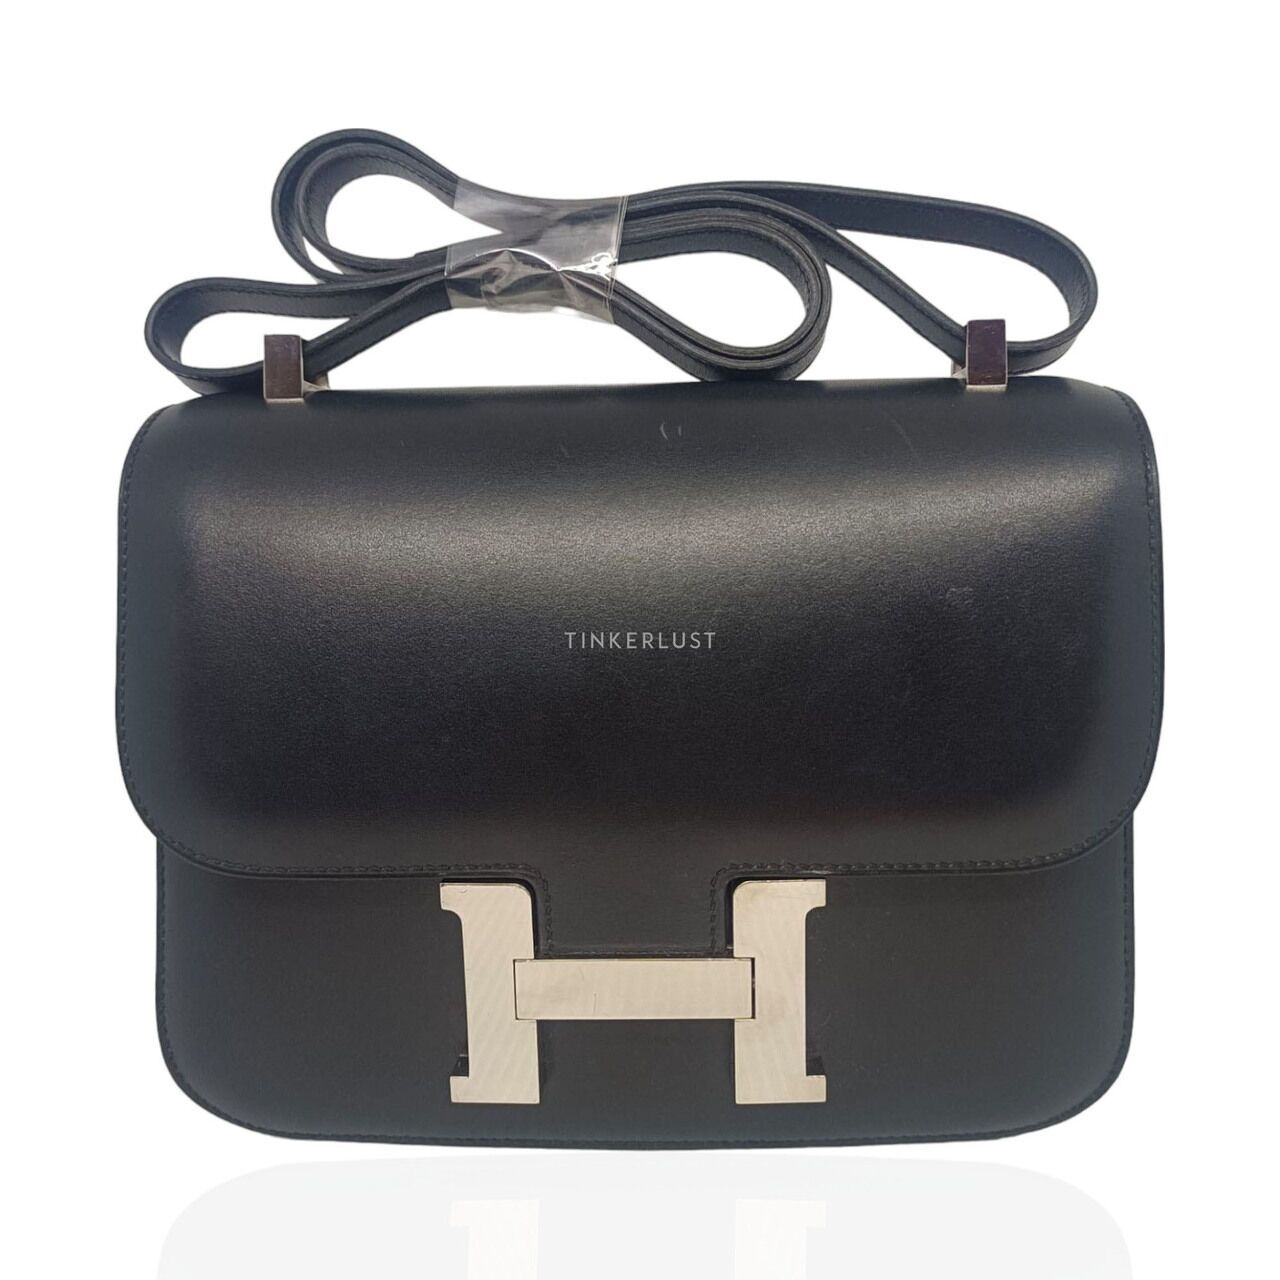 Hermes Constance 24 Black Box Leather PHW #O Sling Bag